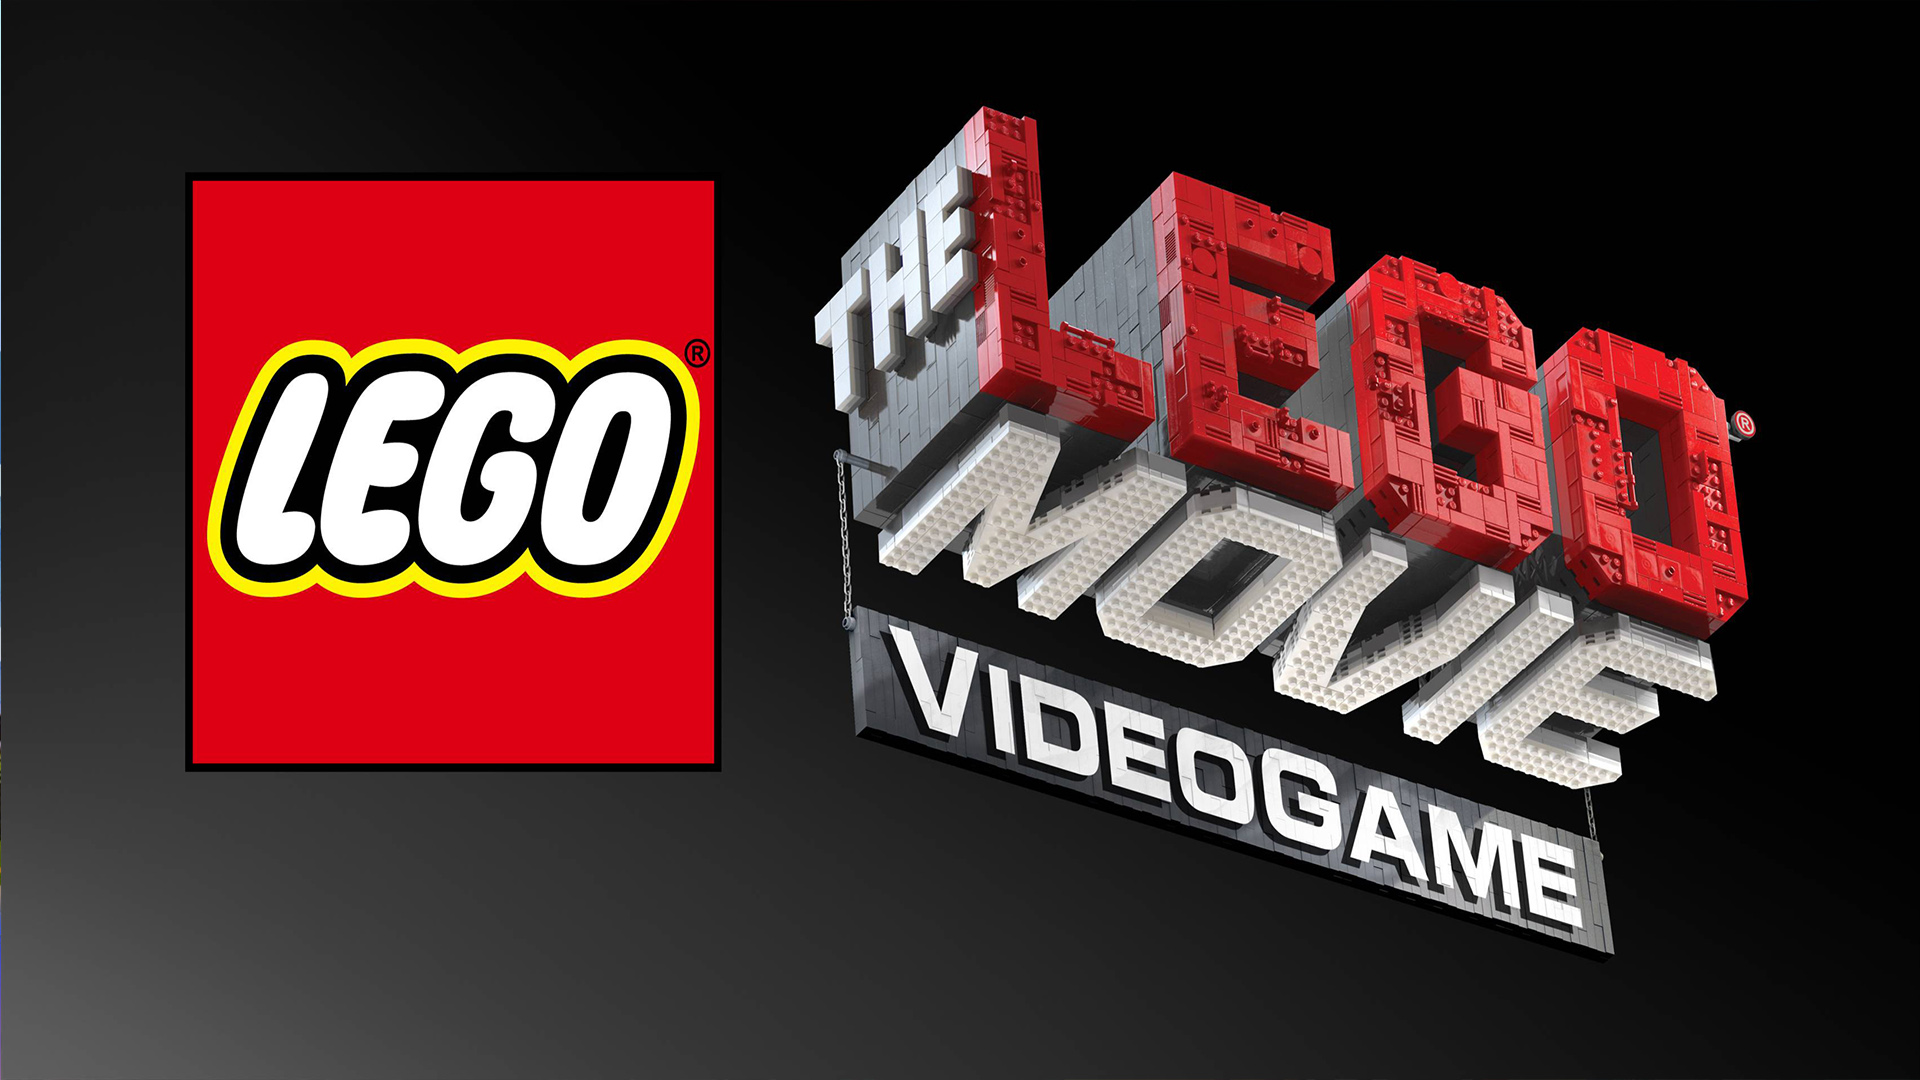 340495 descargar imagen the lego movie videogame, videojuego, lego: fondos de pantalla y protectores de pantalla gratis